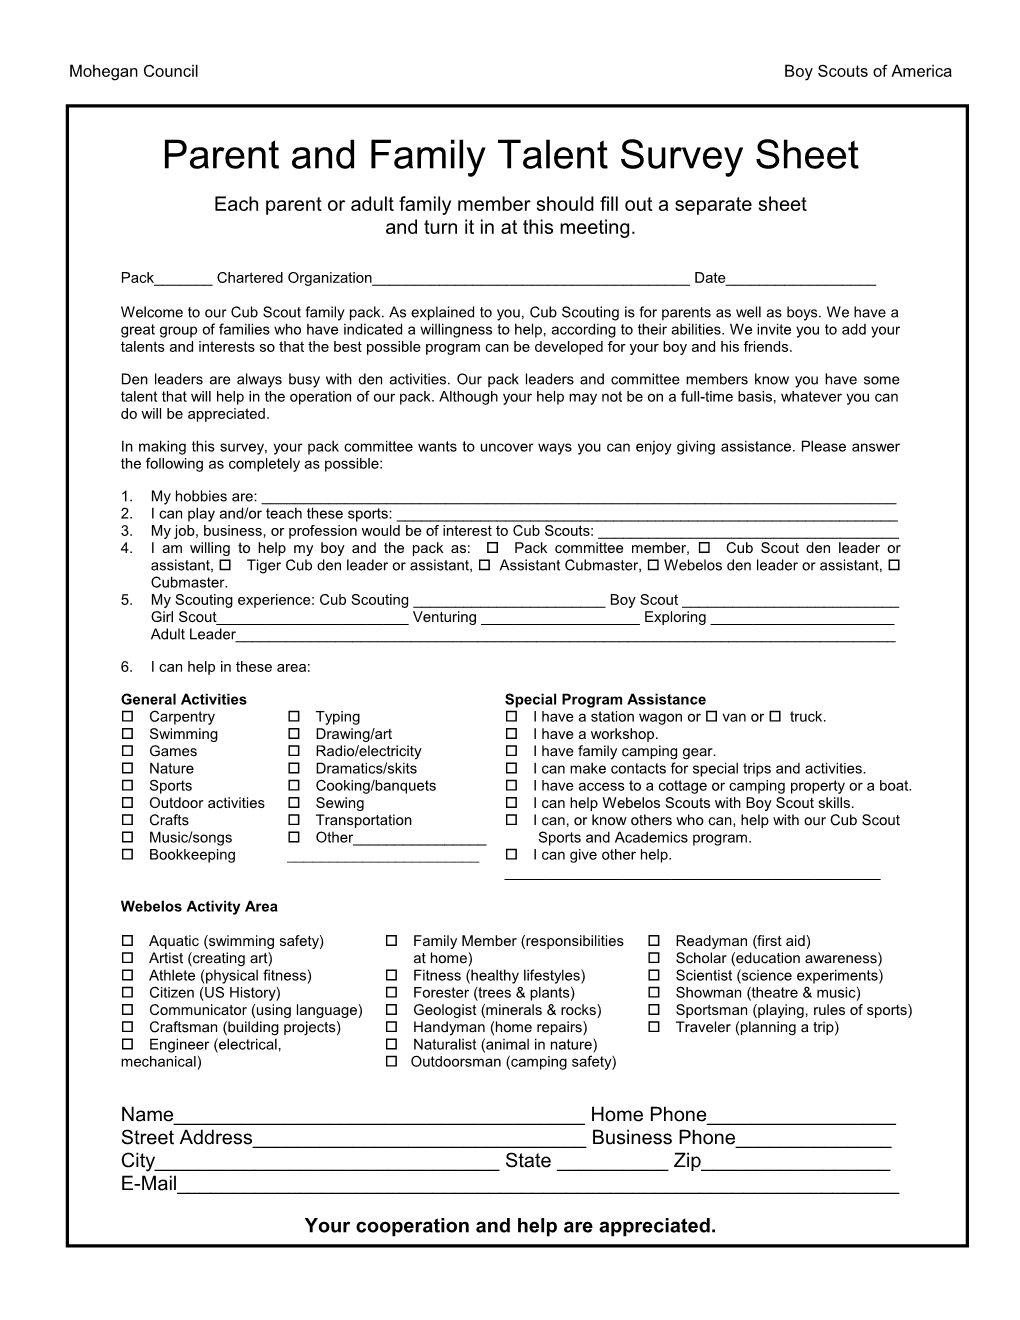 Parent and Family Talent Survey Sheet